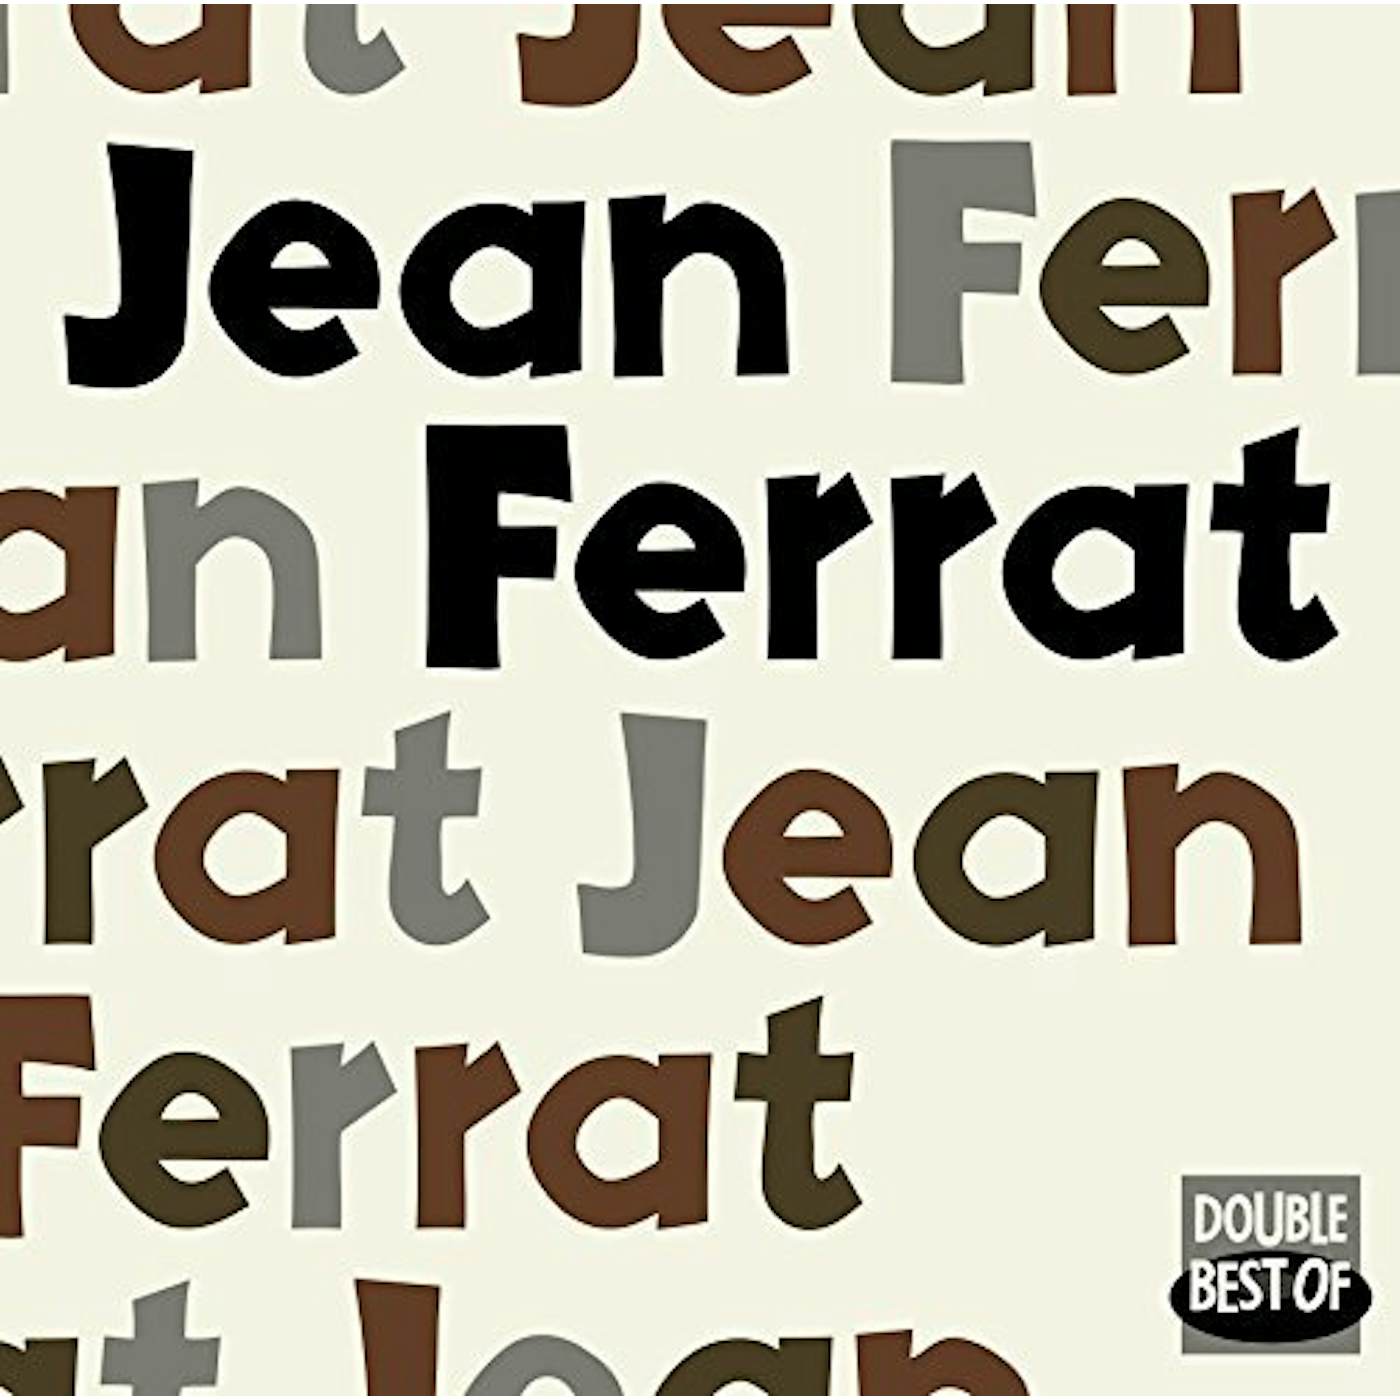 Jean Ferrat DOUBLE BEST OF Vinyl Record